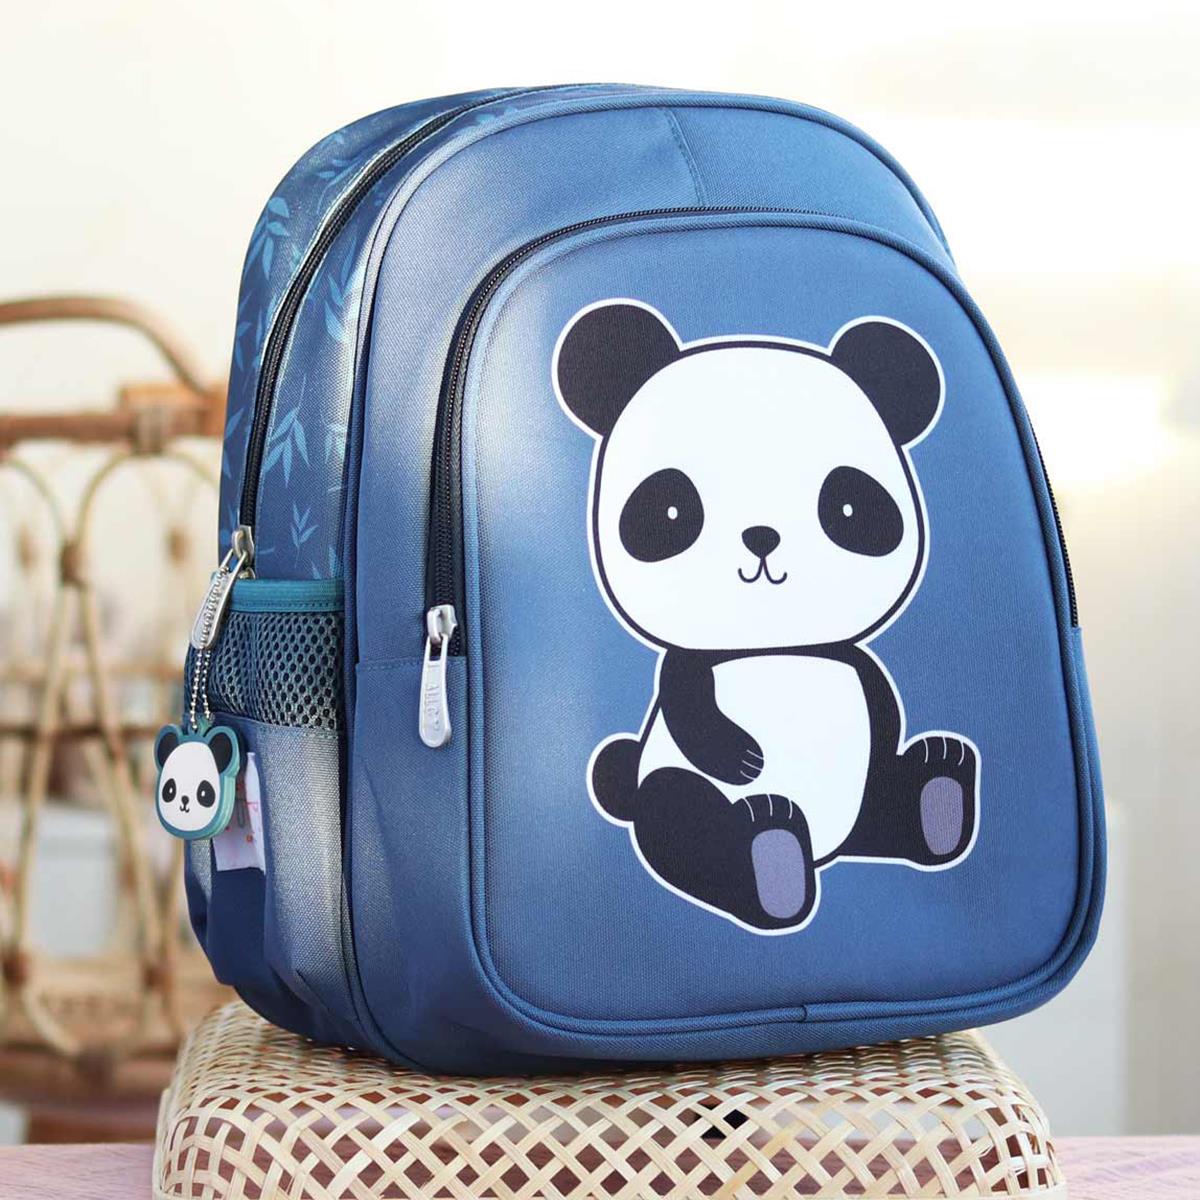 Backpack - Panda (insulated comp.)